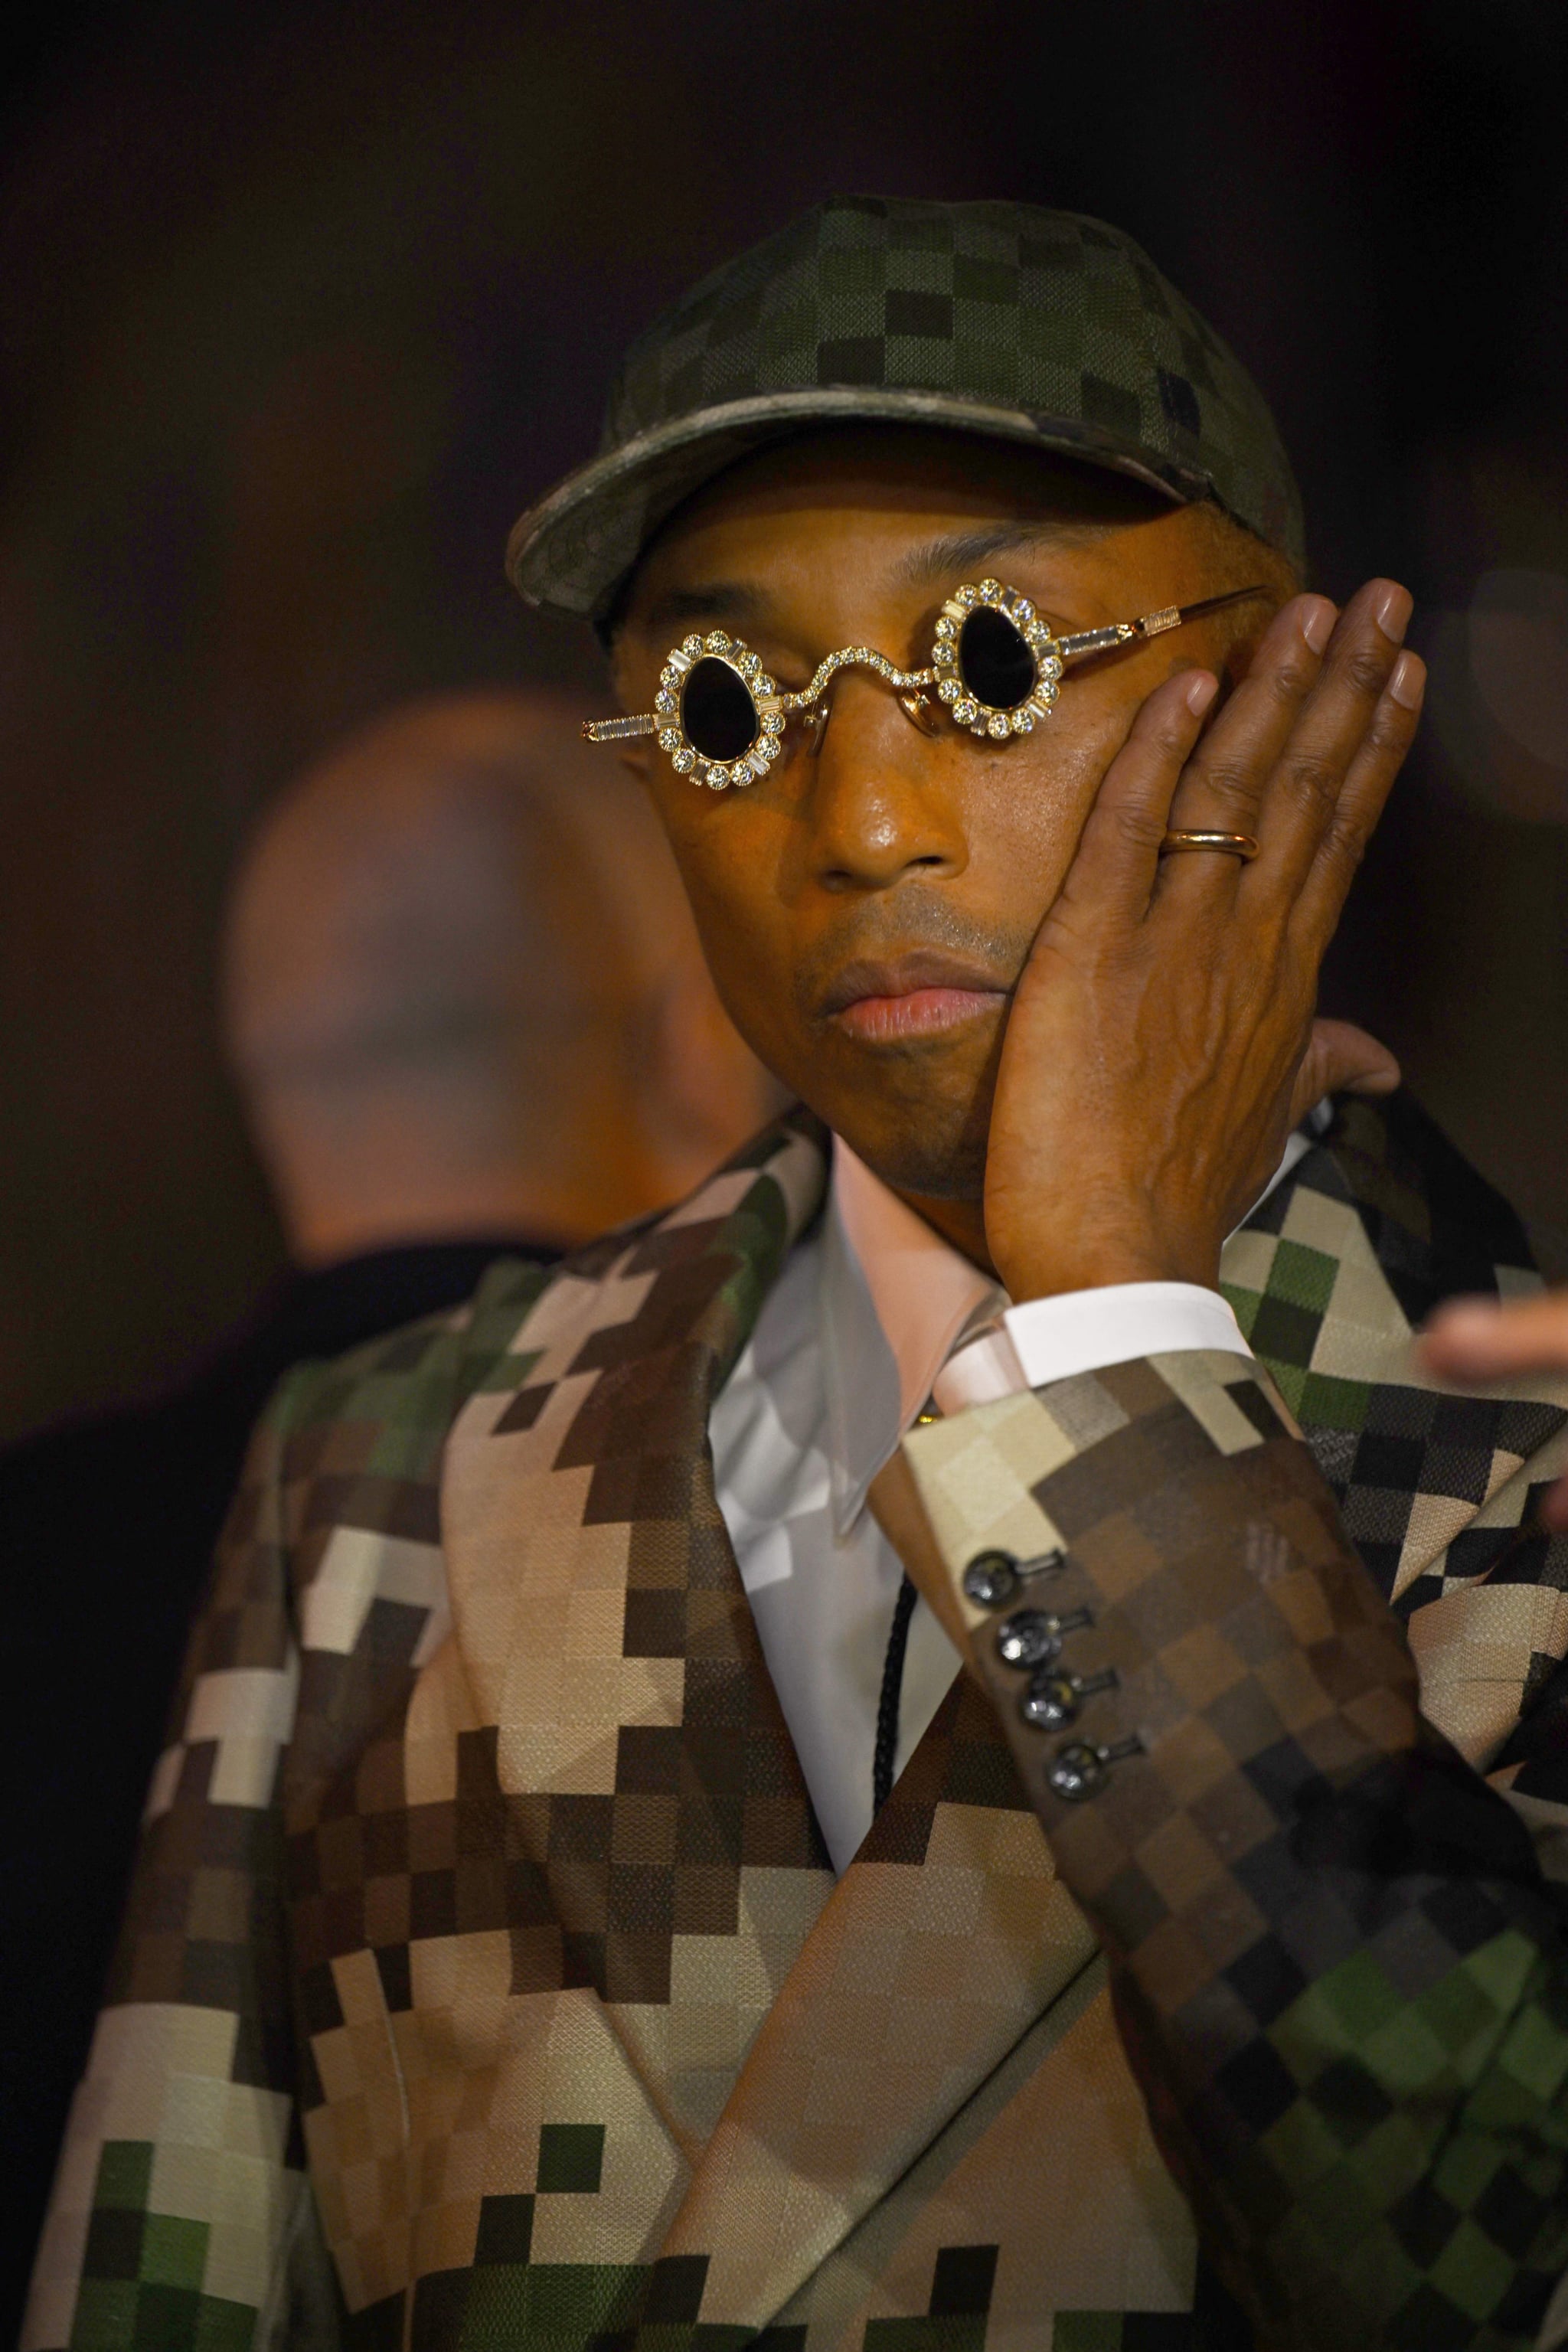 At Louis Vuitton, Pharrell Williams rewrites fashion for celebrity